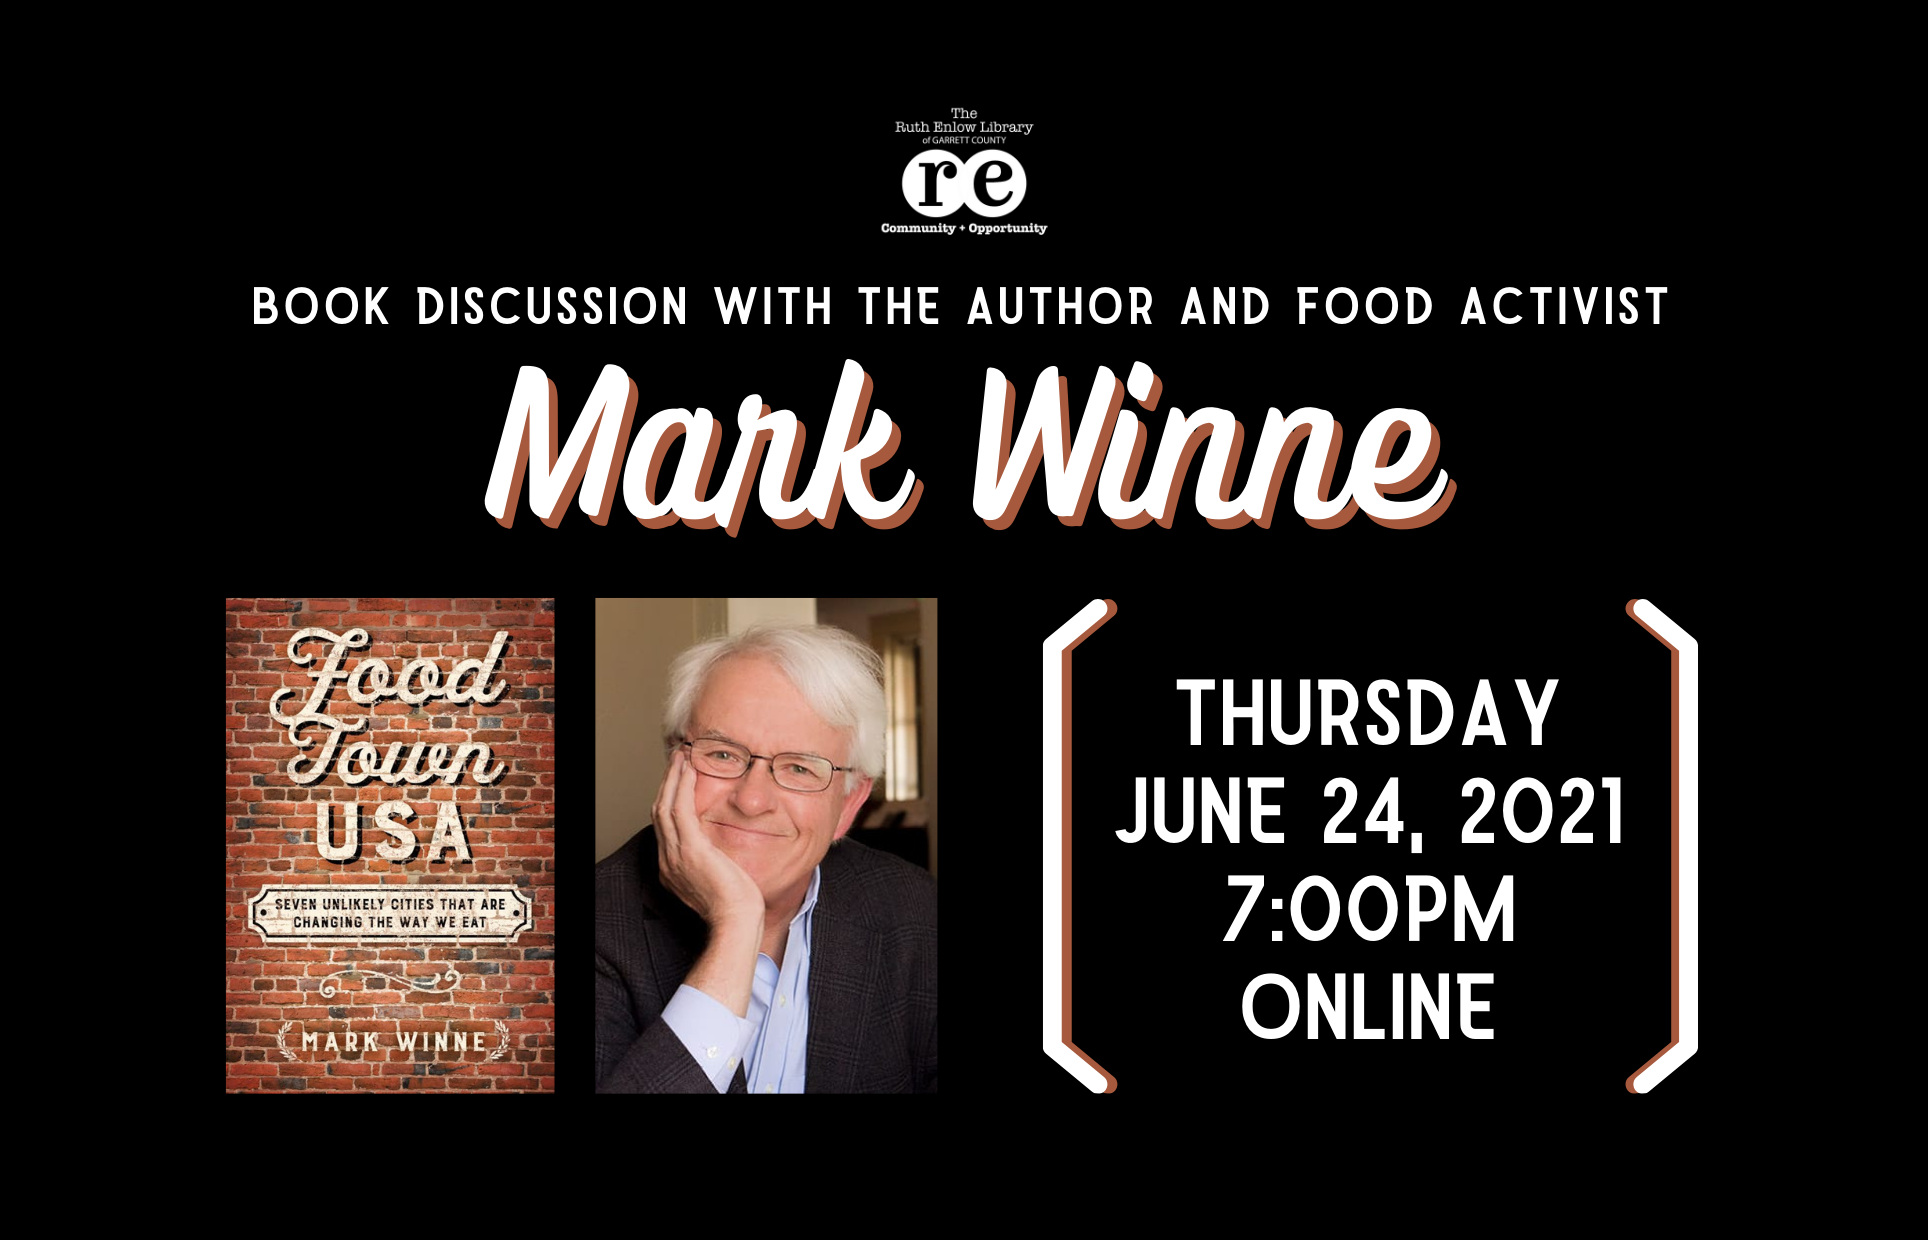 Mark Winne food activist author